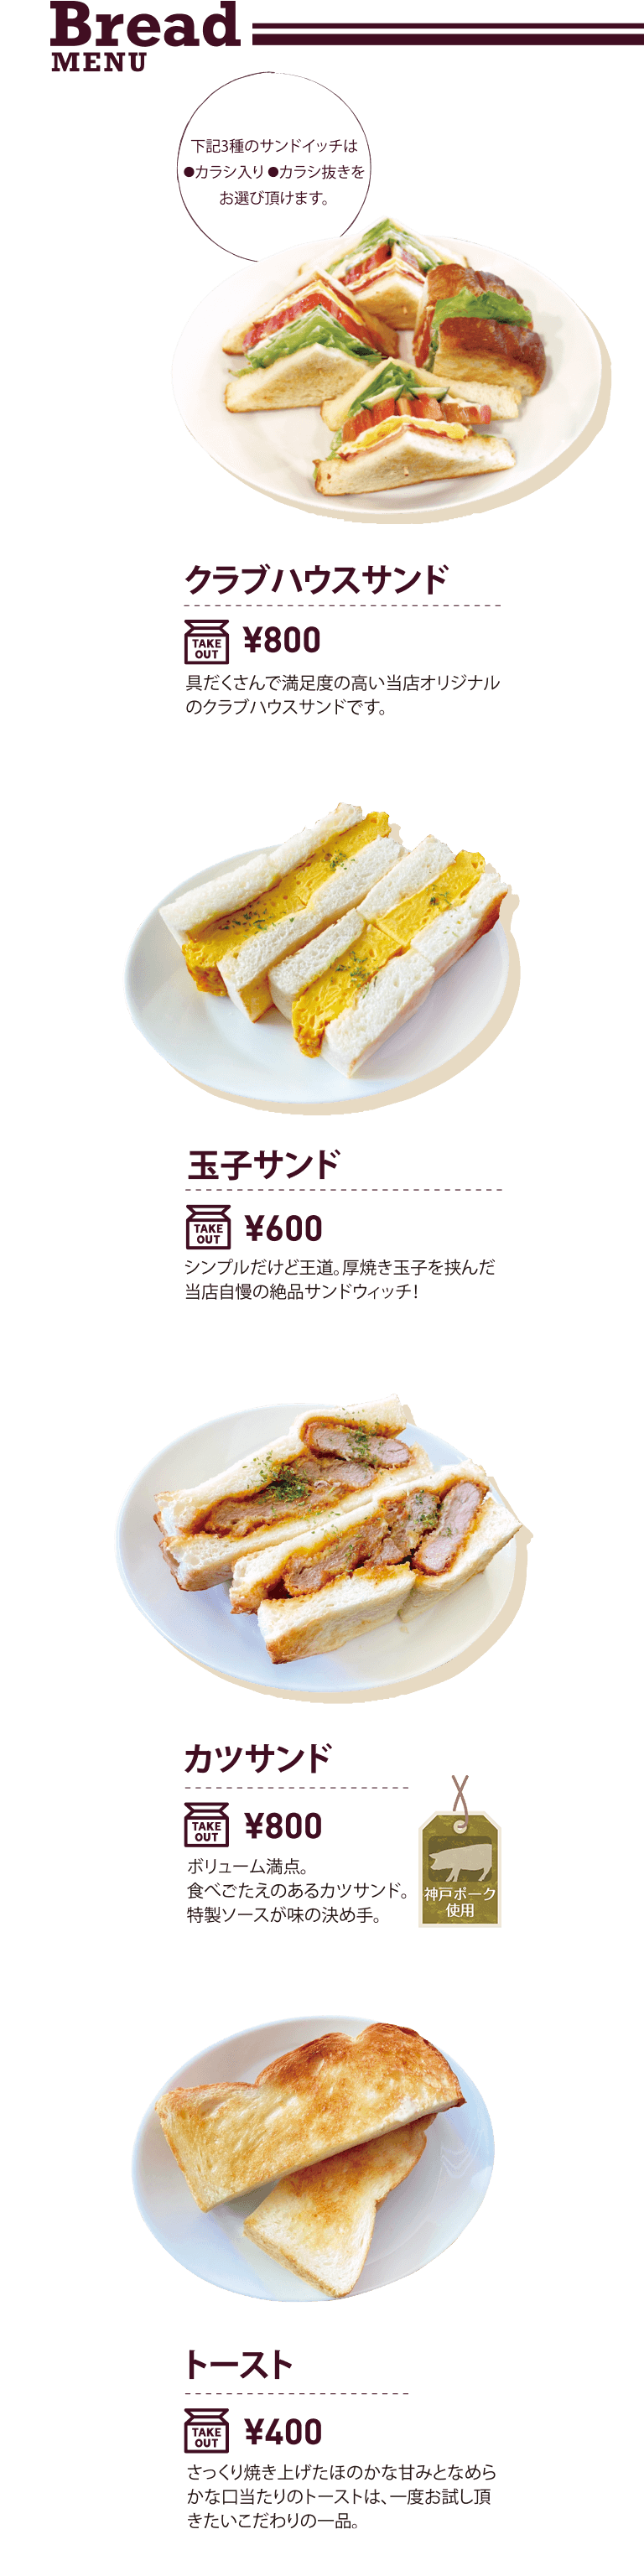 Bread MENU クラブハウスサンド 玉子サンド カツサンド トースト